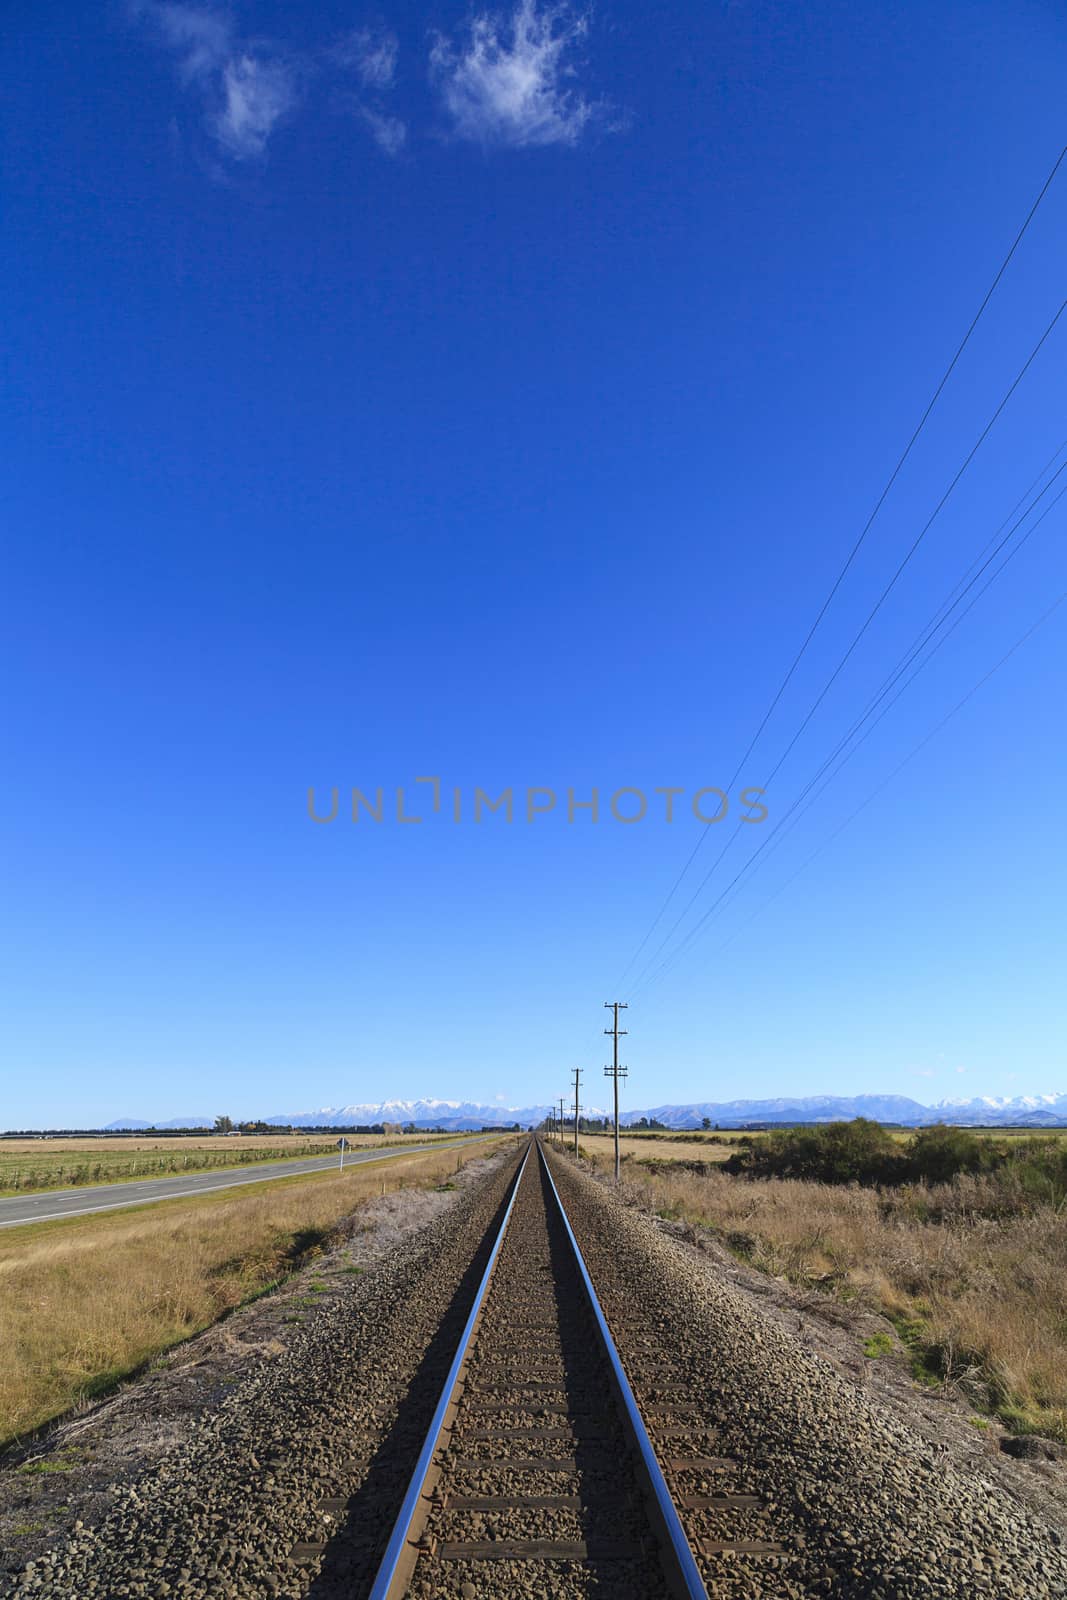 Rural railway straight to horizon under blue sky in Canterbury region, South Island, New Zealand.